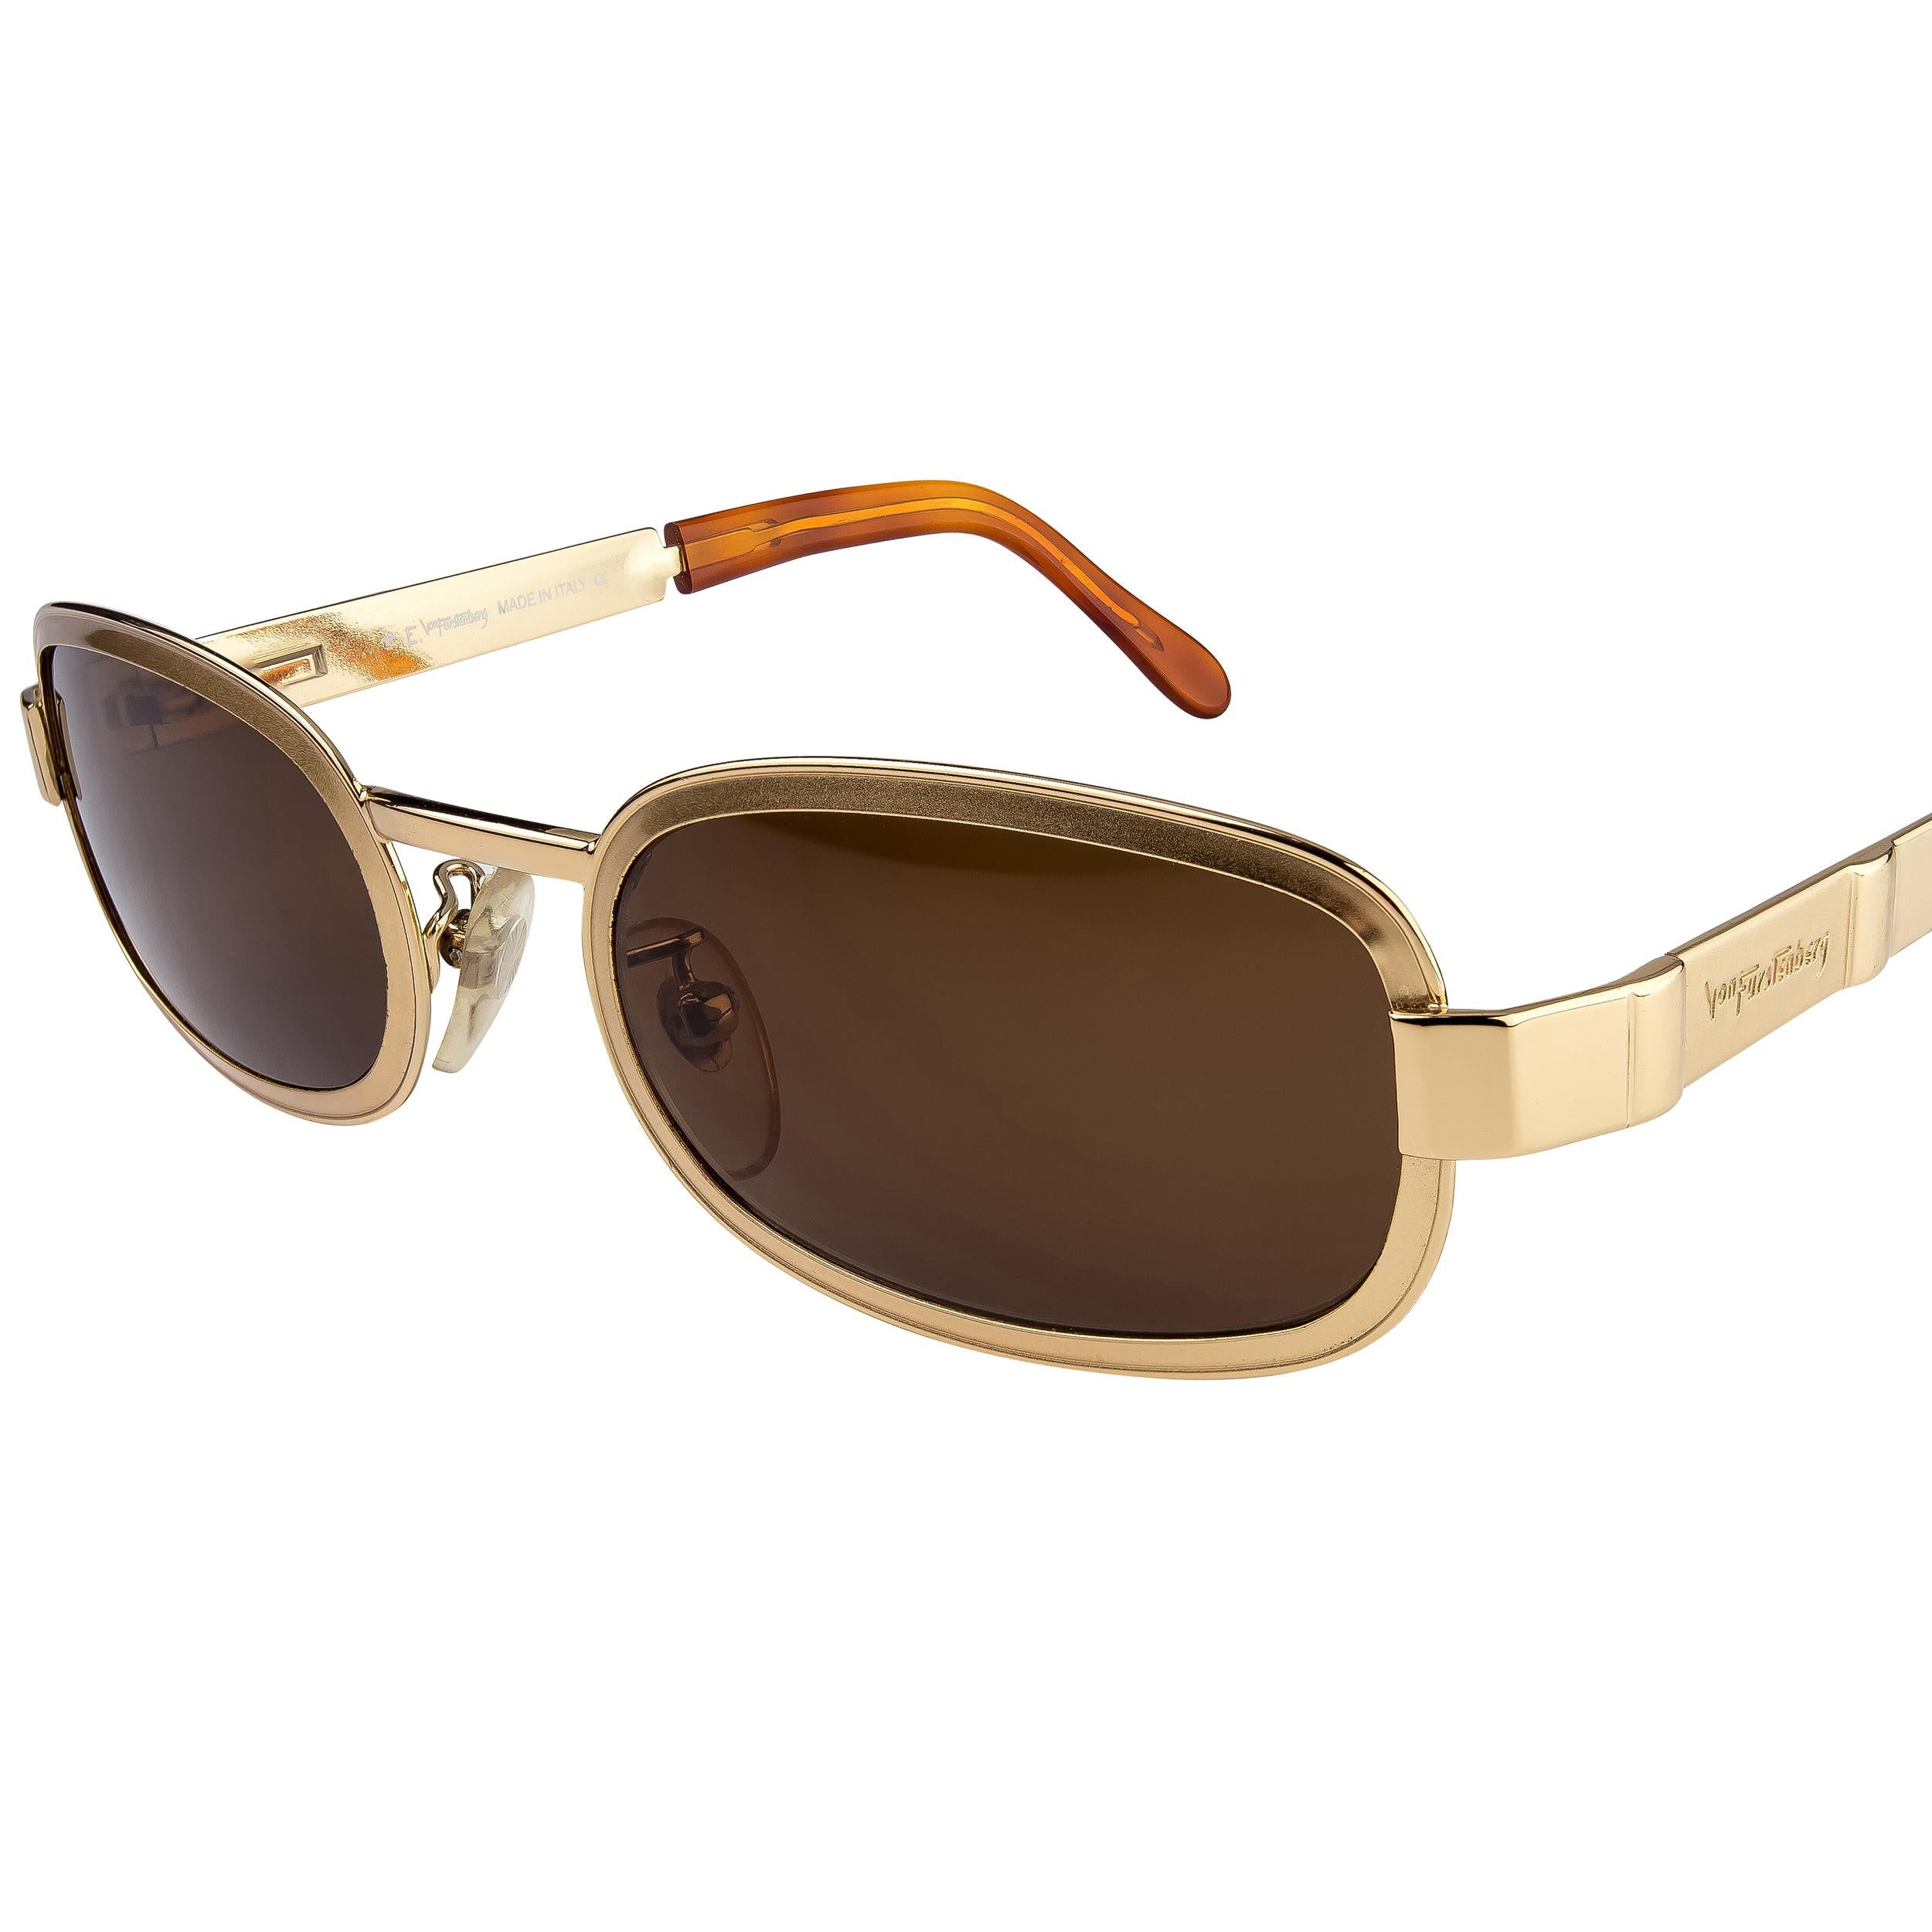 Von Furstenberg golden vintage sunglasses 80s In New Condition For Sale In Santa Clarita, CA